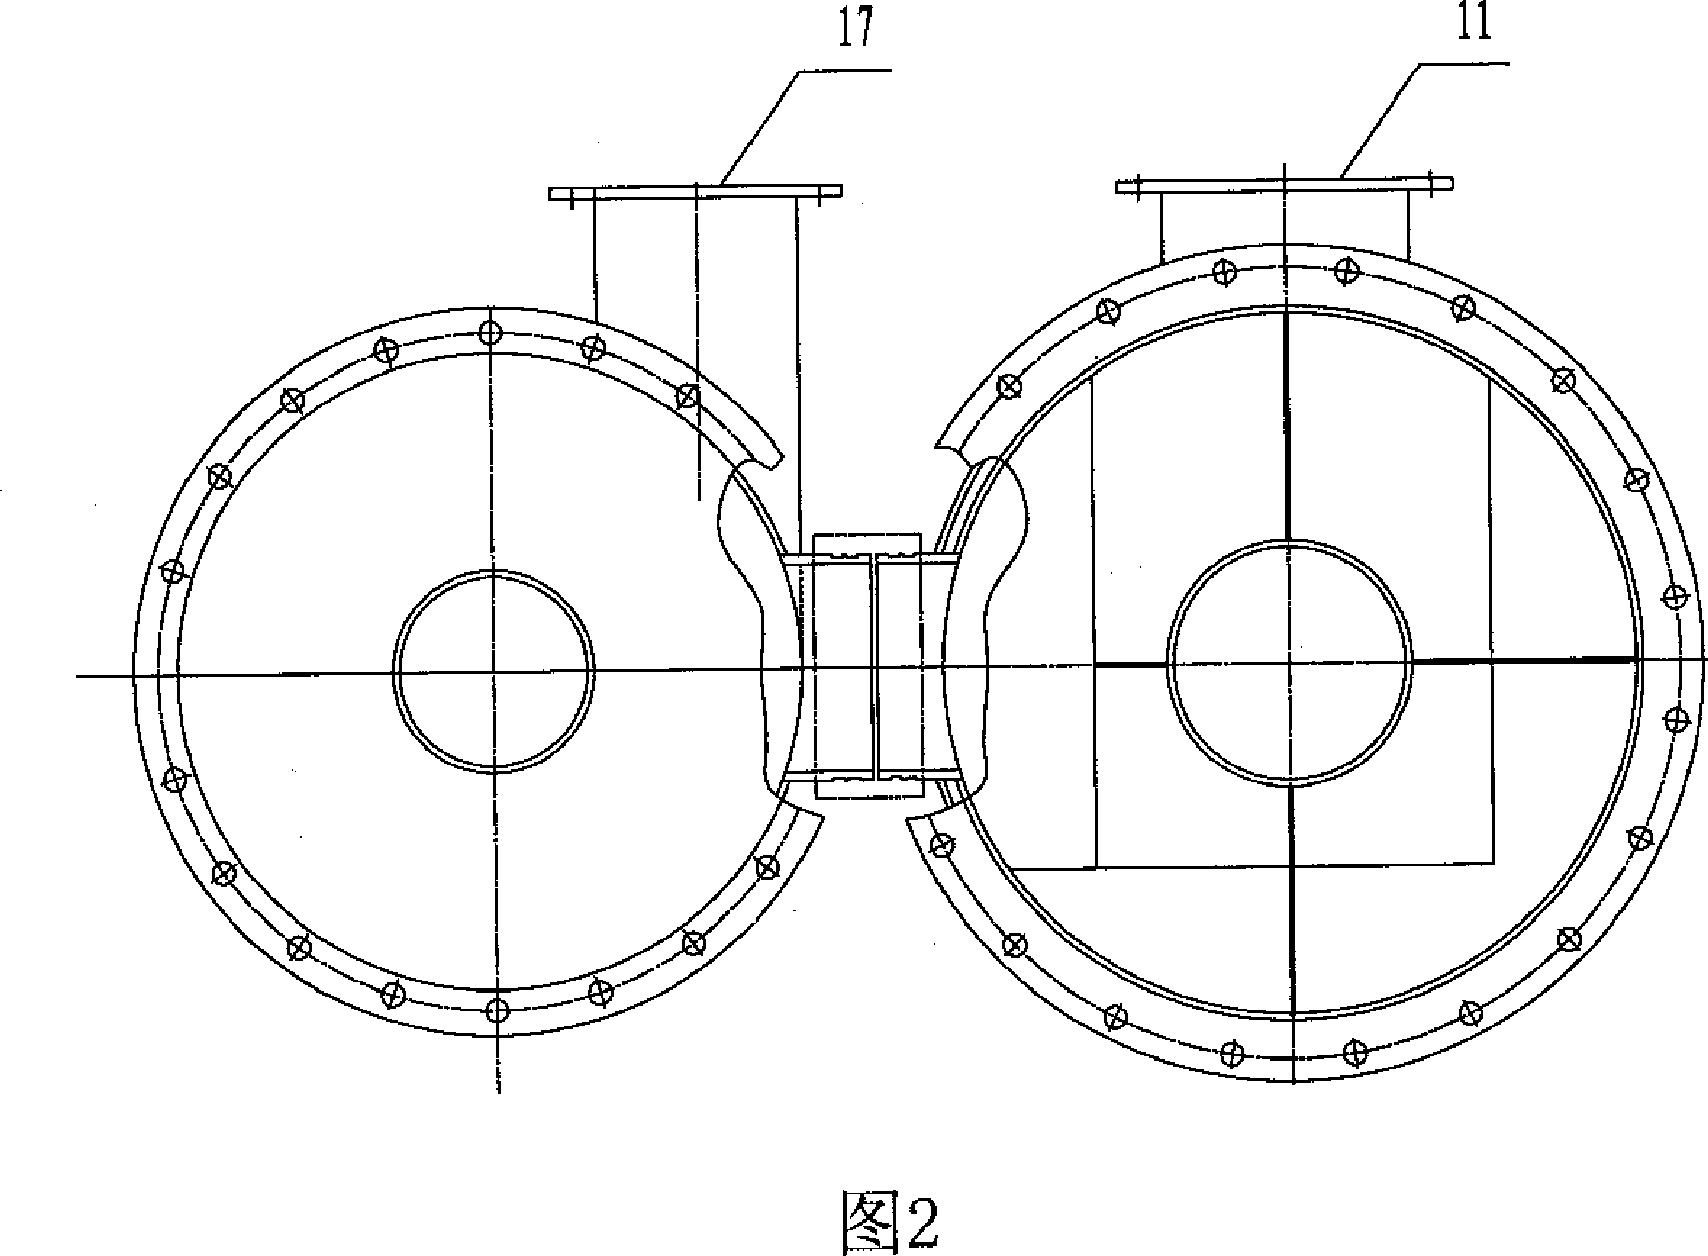 Compressor intercooling system